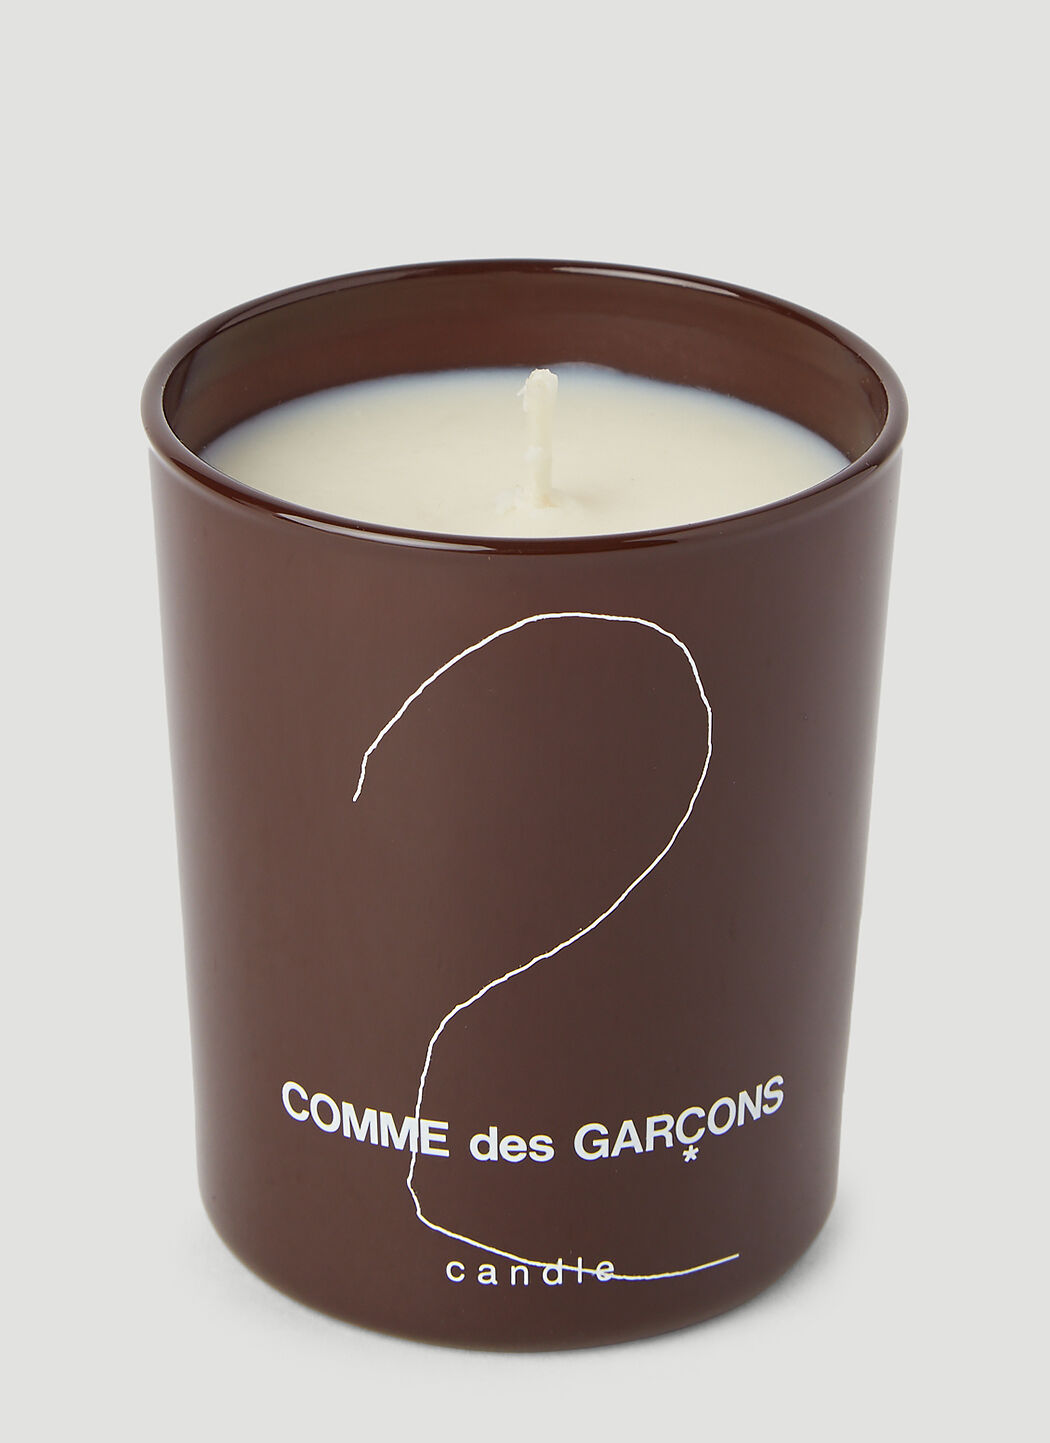 Comme des Garçons PARFUMS 꼼 데 가르송 2 캔들 Natural cdp0344004